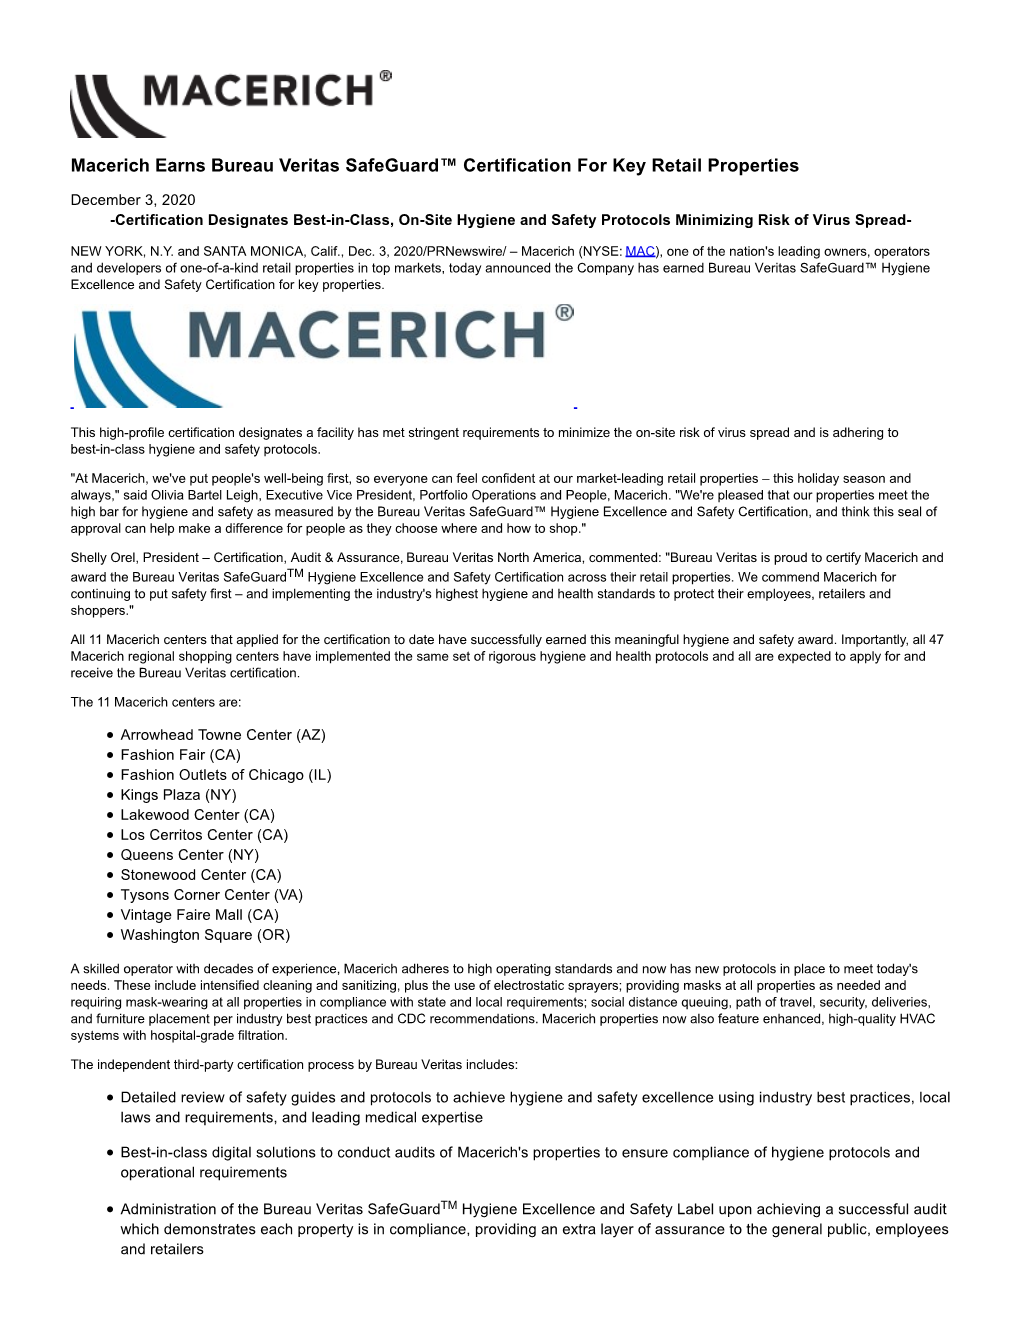 Macerich Earns Bureau Veritas Safeguard™ Certification for Key Retail Properties